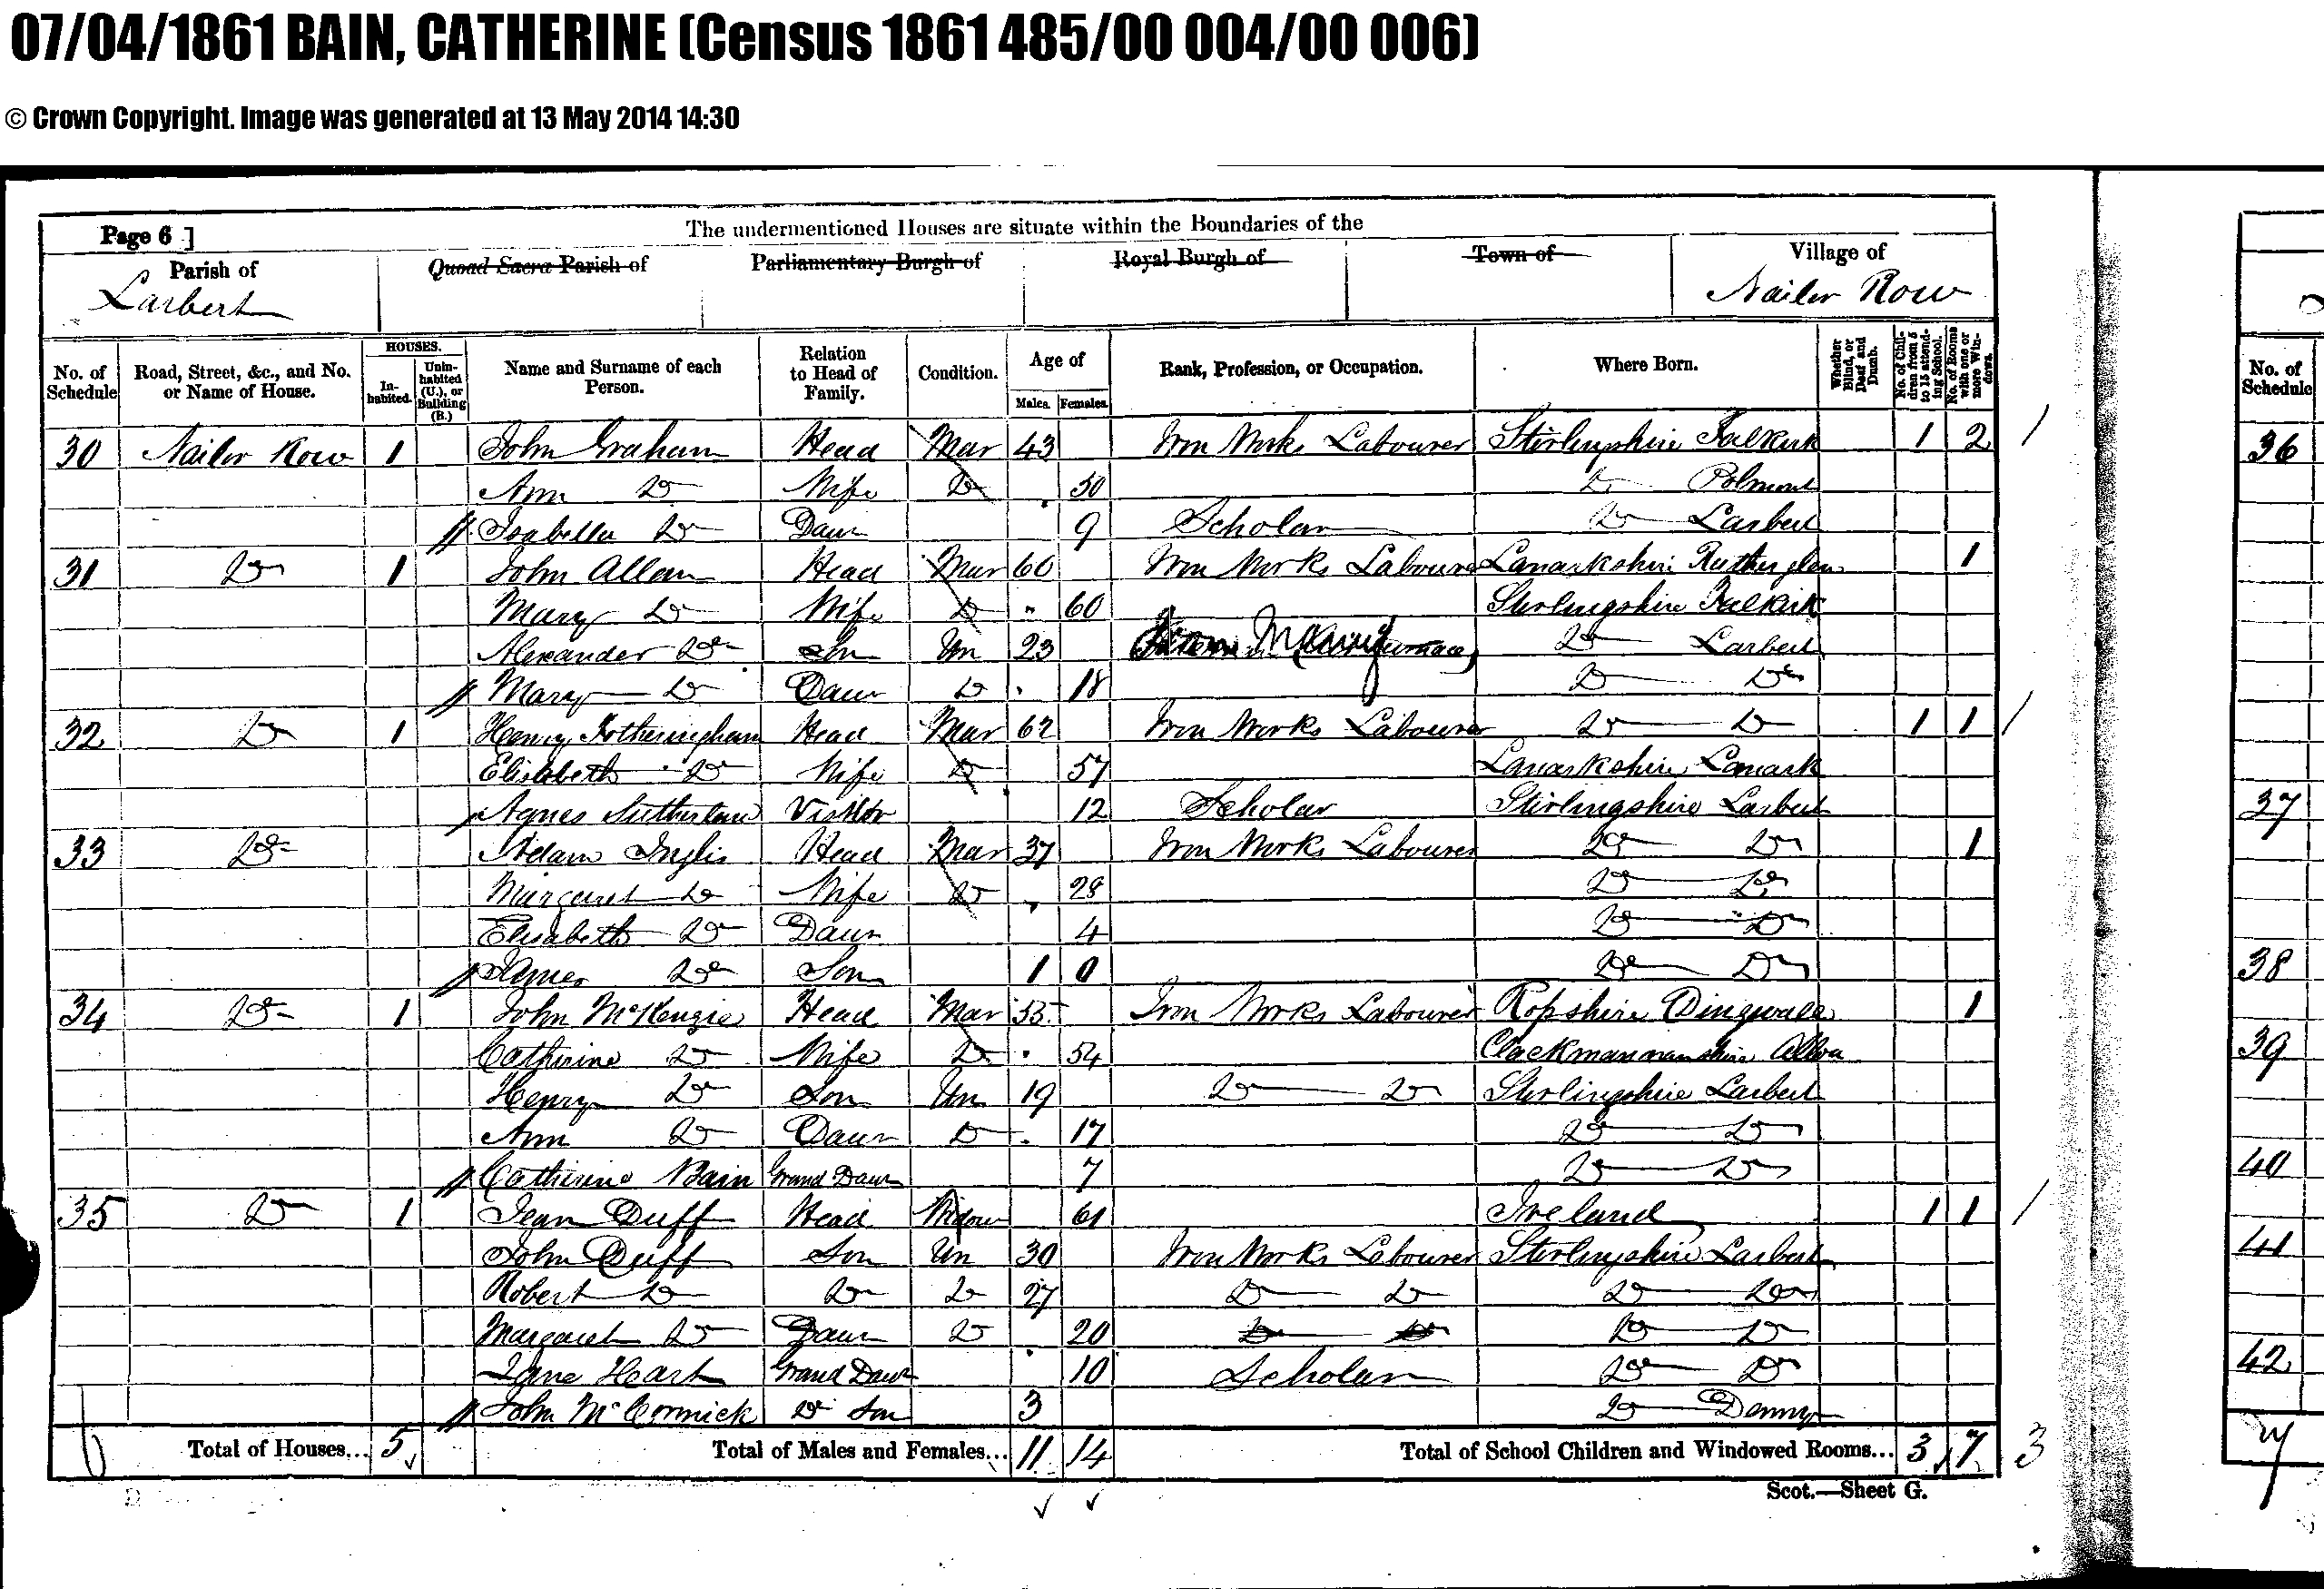 Census 1861 McKENZIE - BAIN Household, April 7, 1861